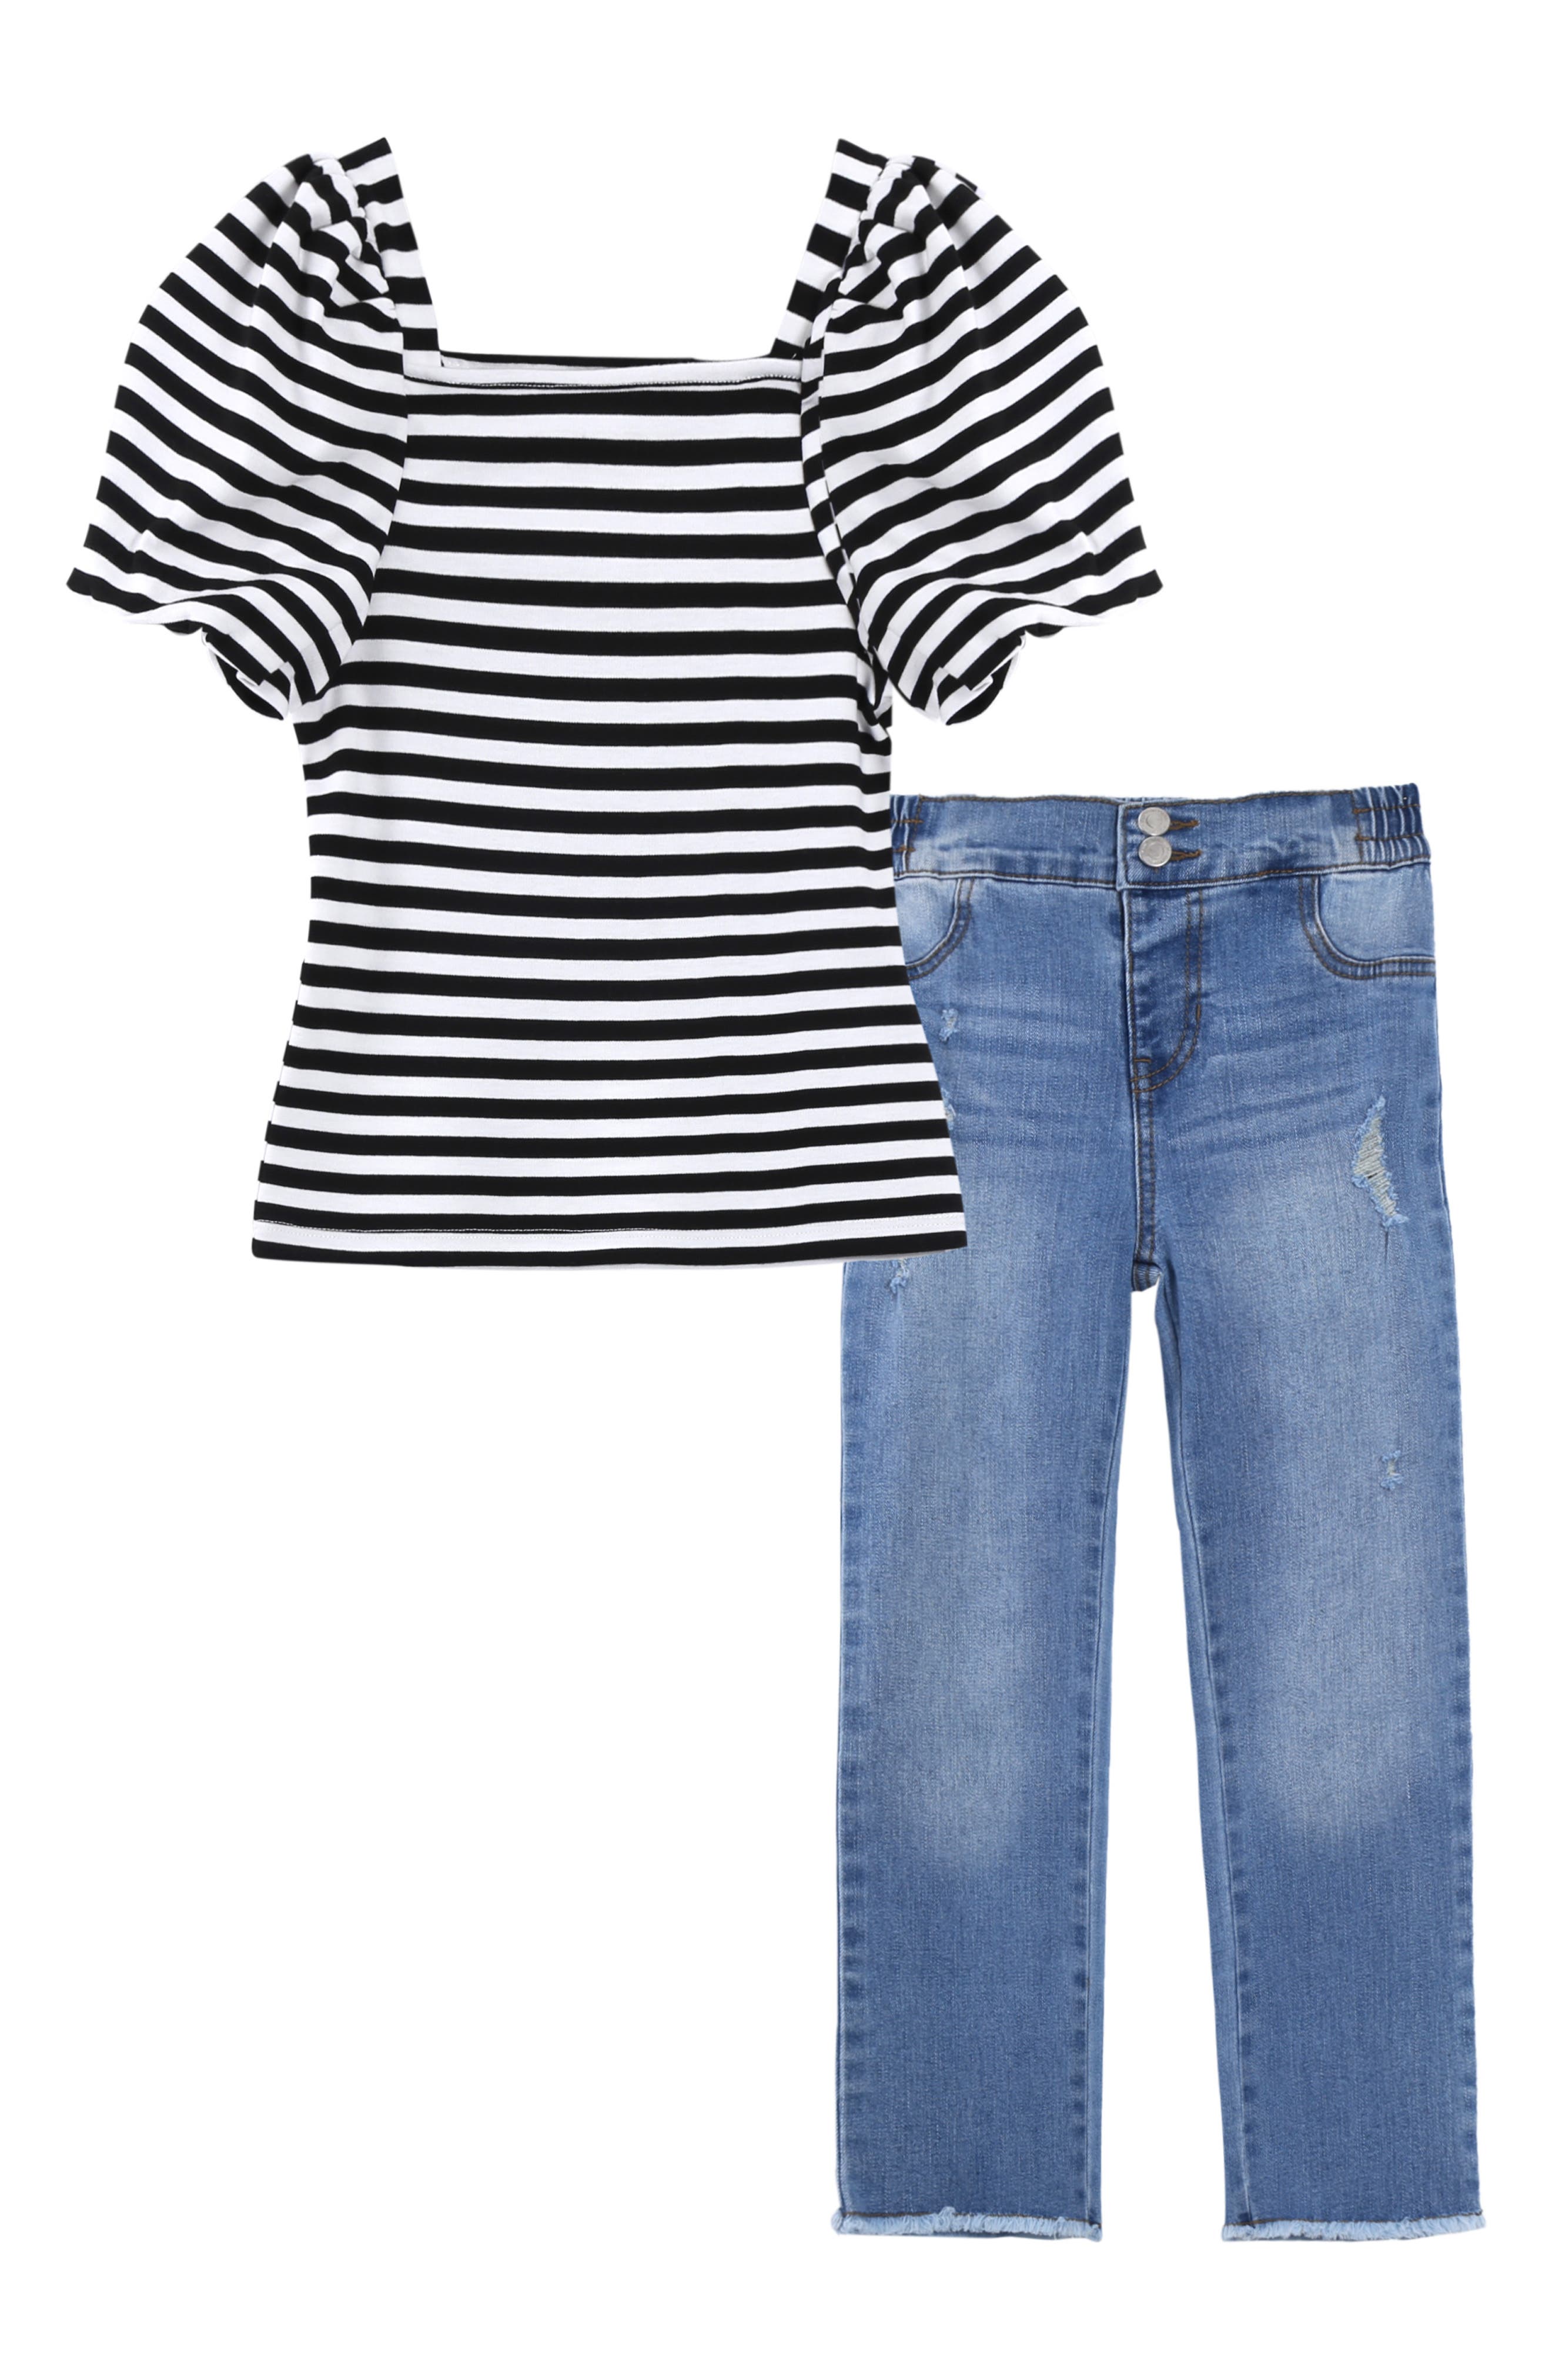 Kids Stripe Top & Stretch Denim Jeans Set in Black/White Stripe at Nordstrom Nordstrom Clothing Jeans Stretch Jeans 